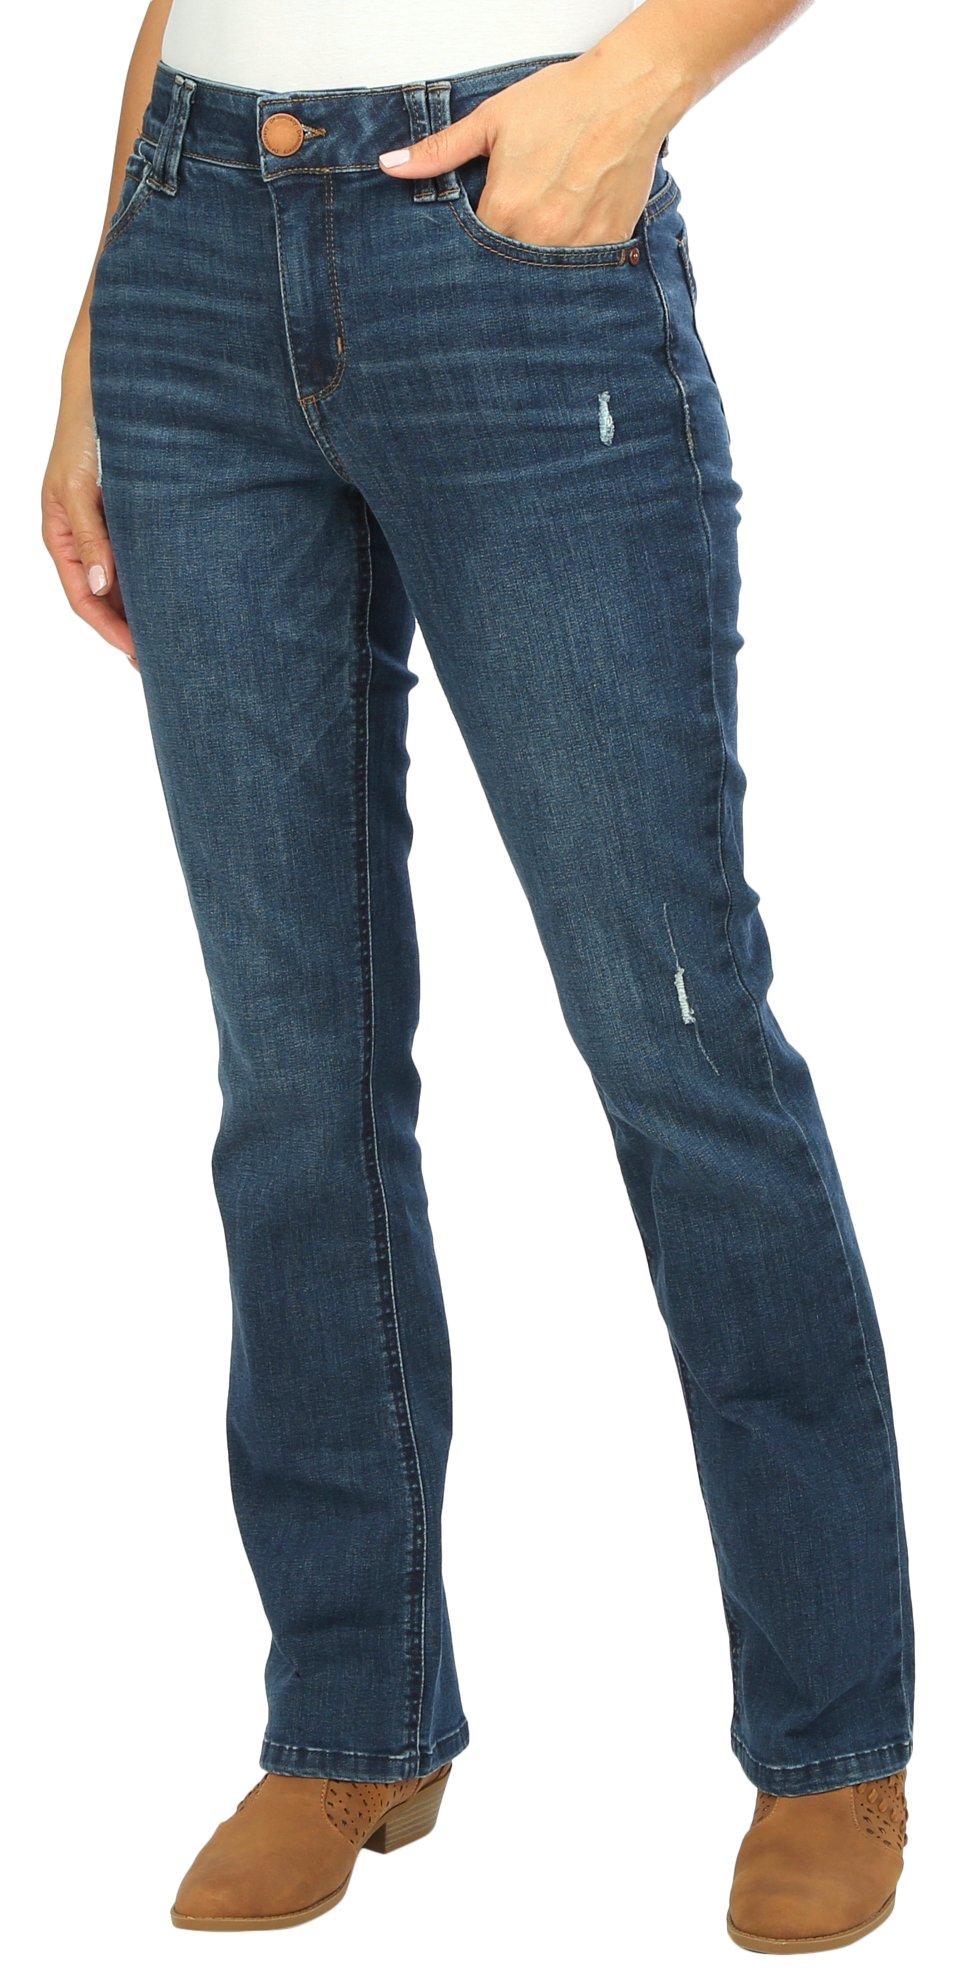 Earl Jeans Embellished Pockets Medium Wash Straight Leg Stretch